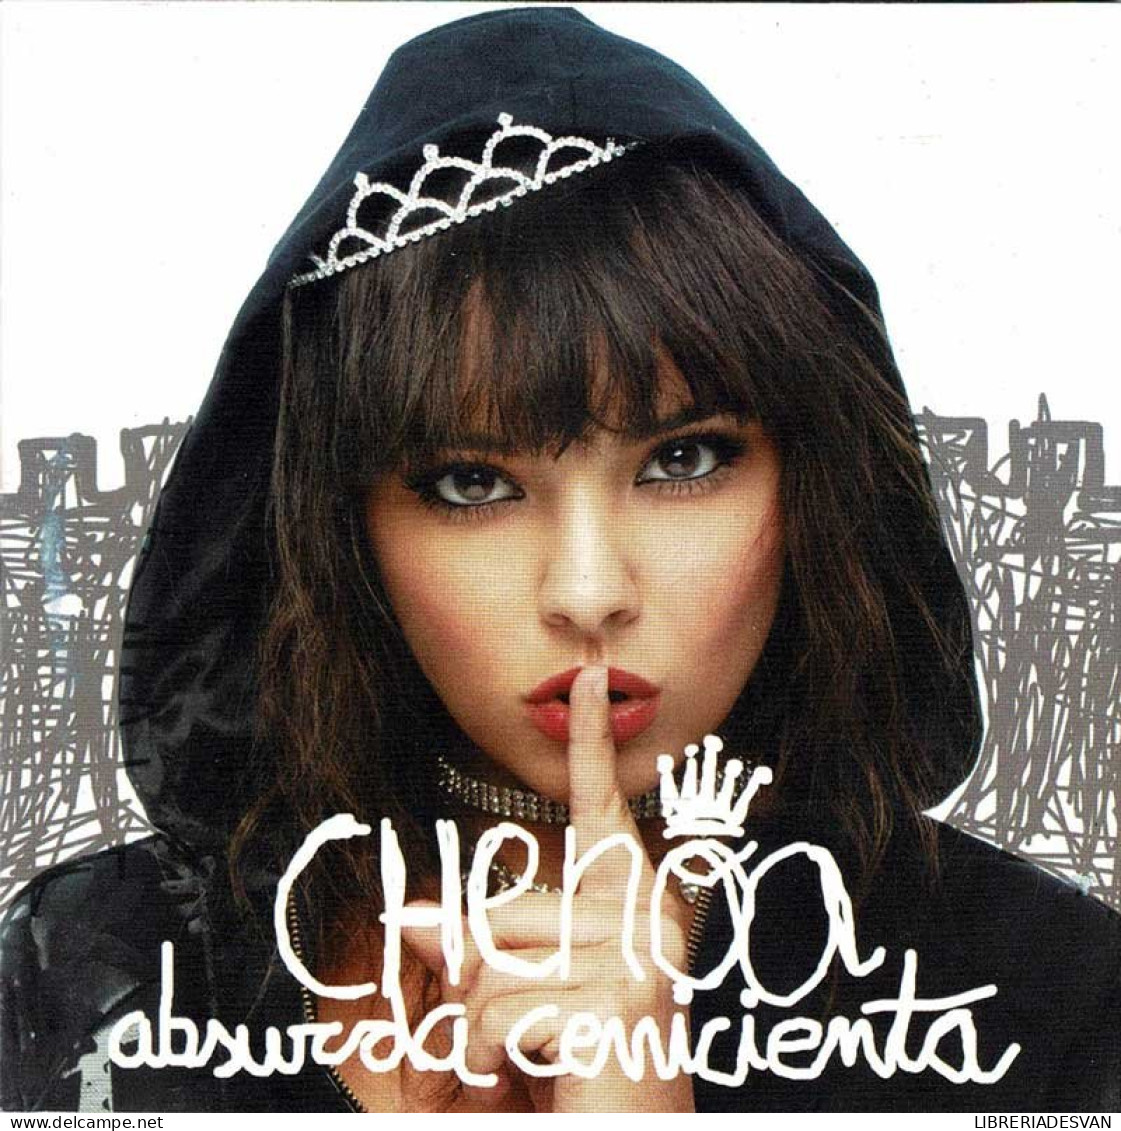 Chenoa - Absurda Cenicienta. CD - Disco, Pop